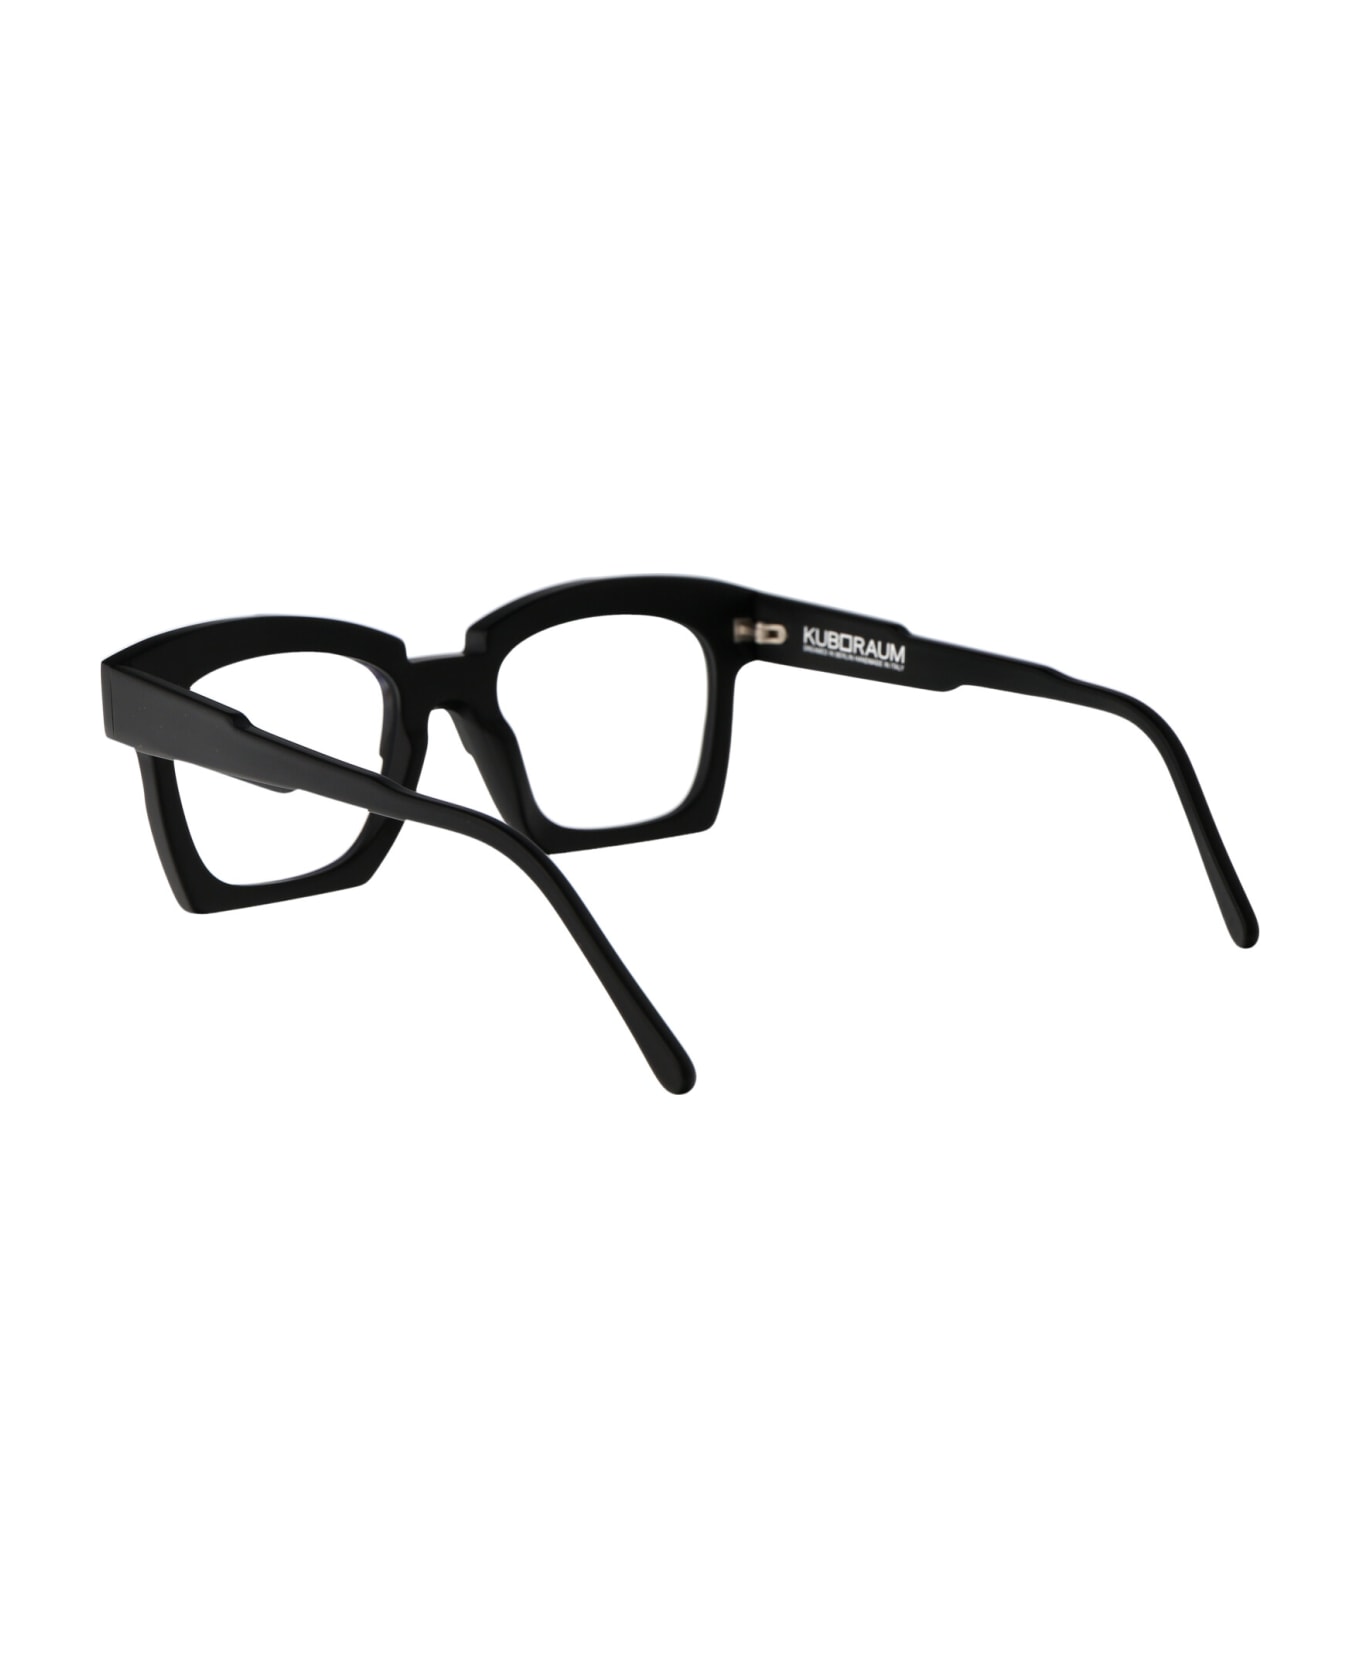 Kuboraum Maske K5 Glasses - BM black アイウェア